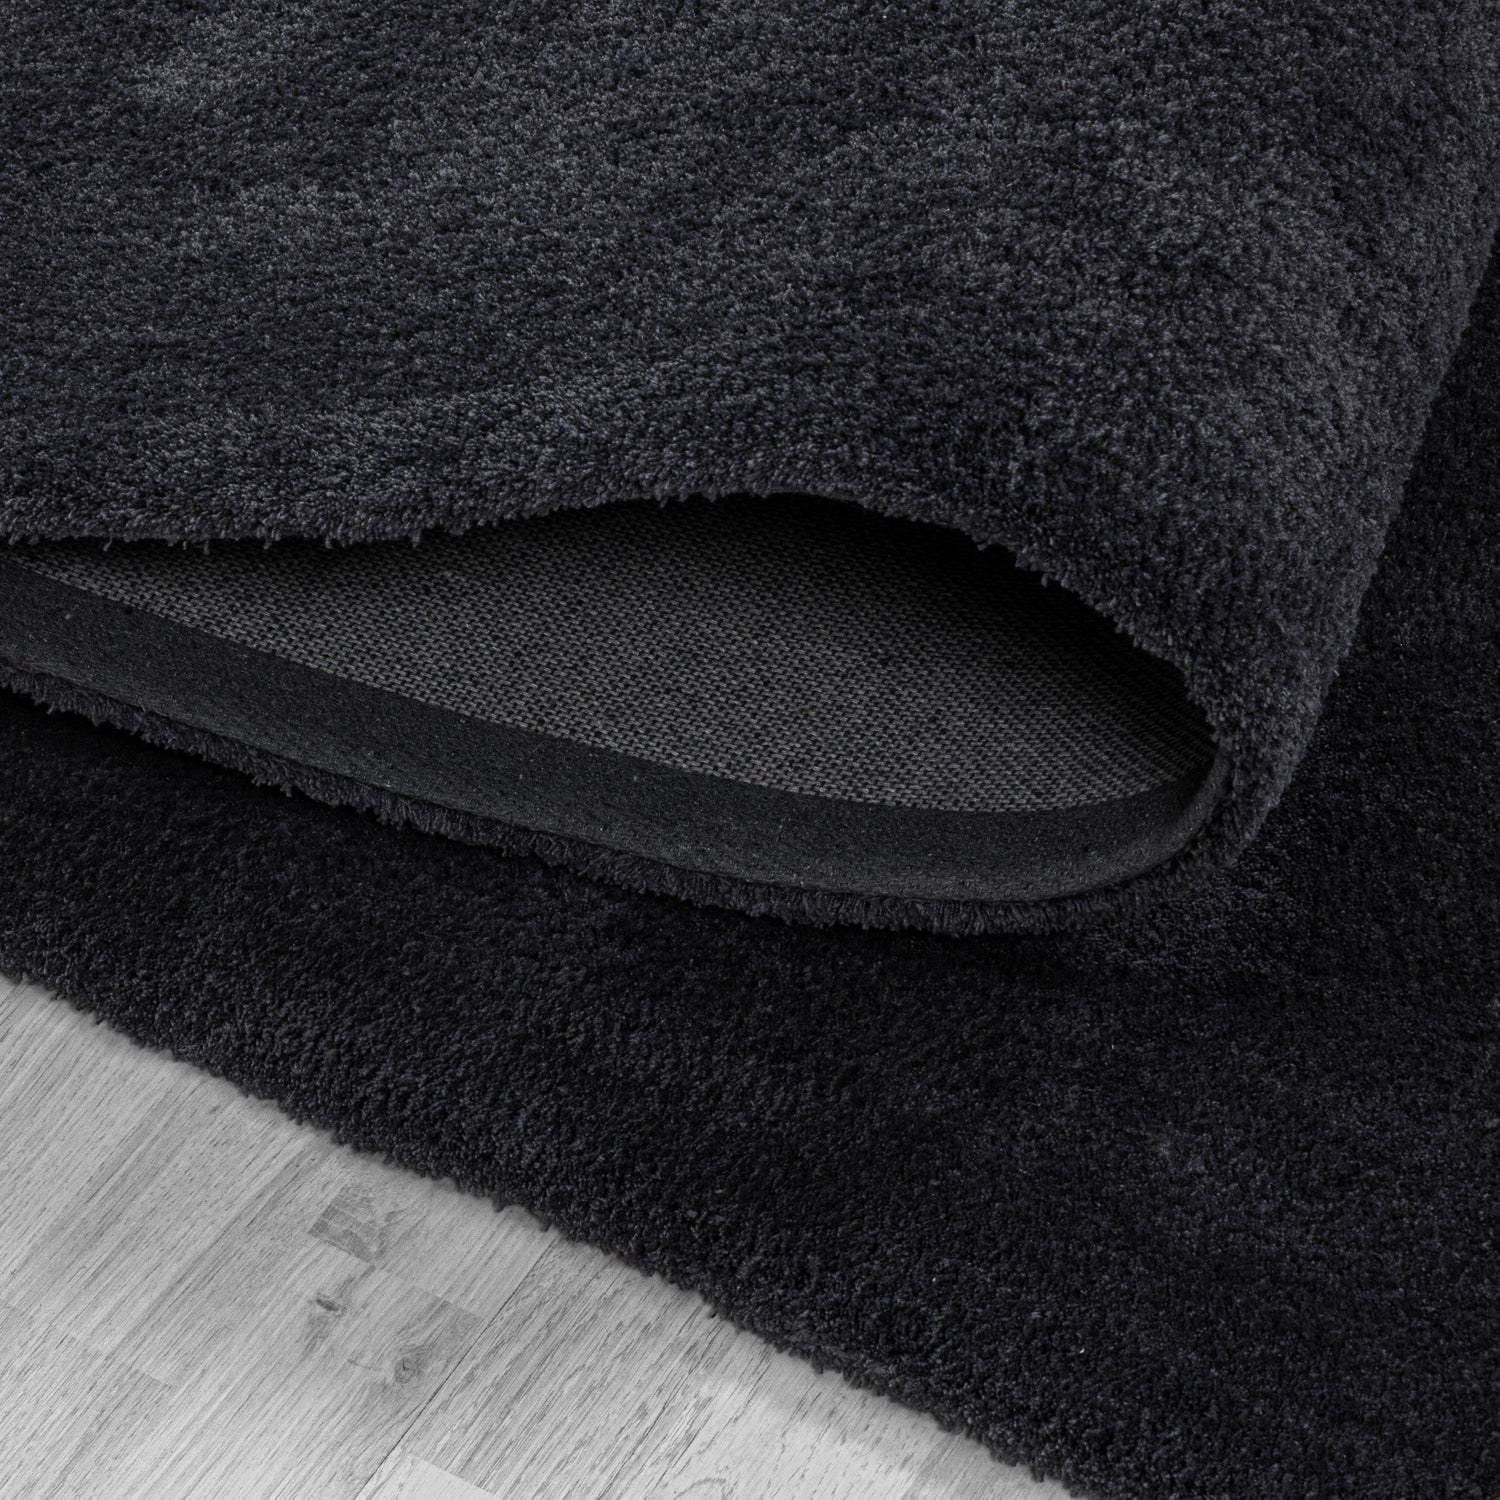 Hochflor Shaggy Teppich Uni Handgewebt Hochwertig Super Soft Micro Einfarbig